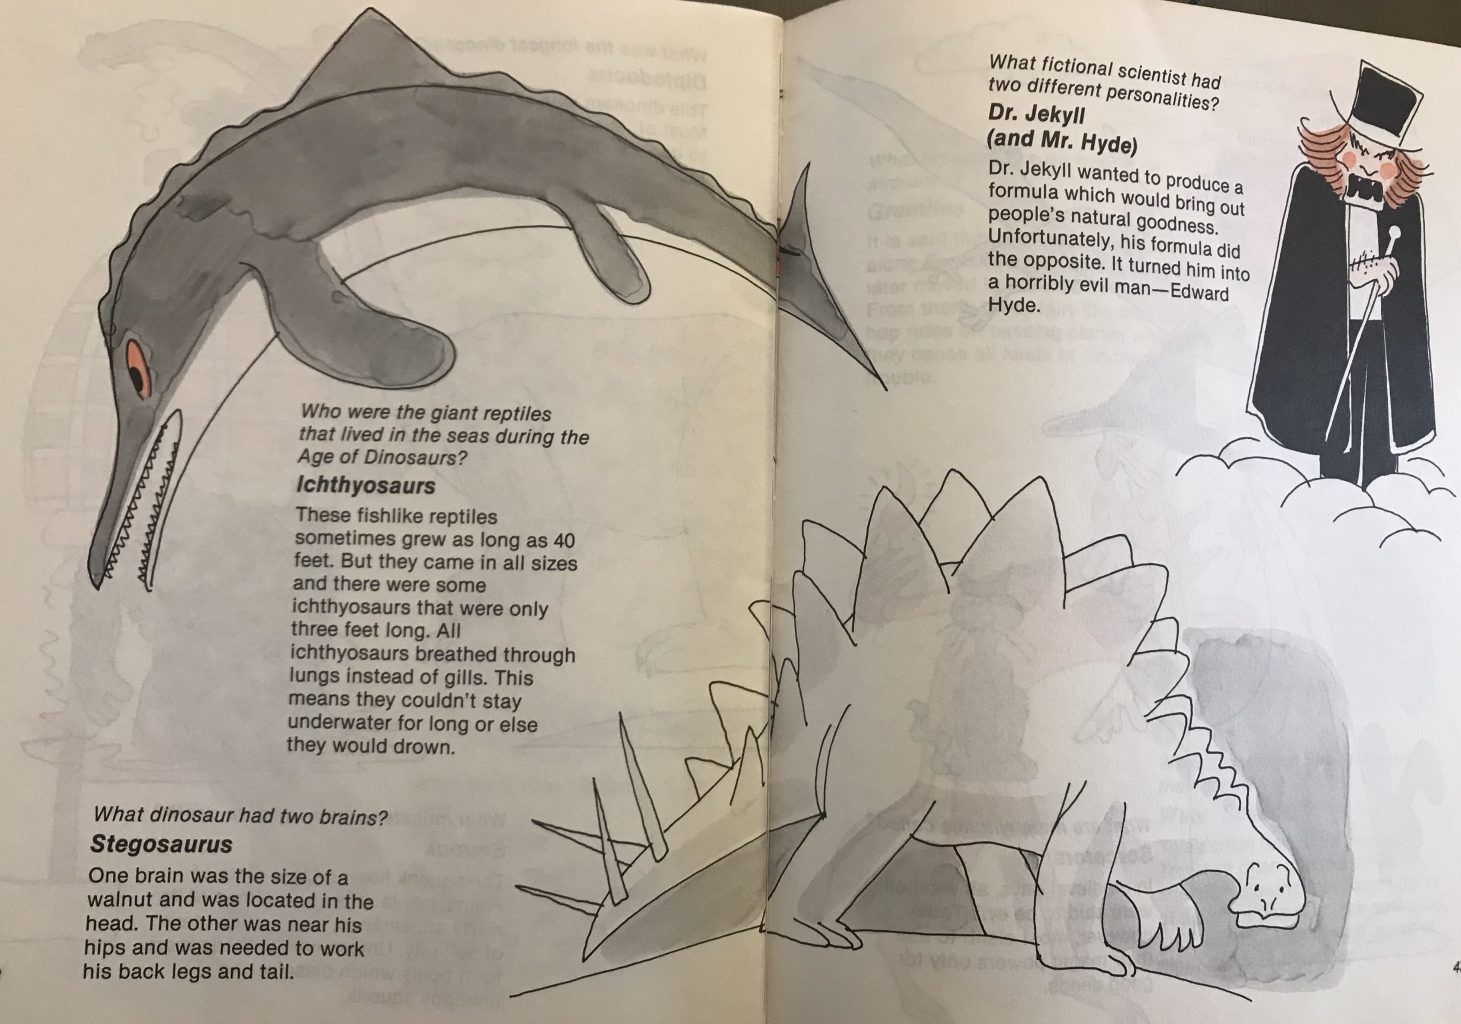 Cartoonish depictions of an ichthyosaur, Stegosaurus, and Dr. Jekyll